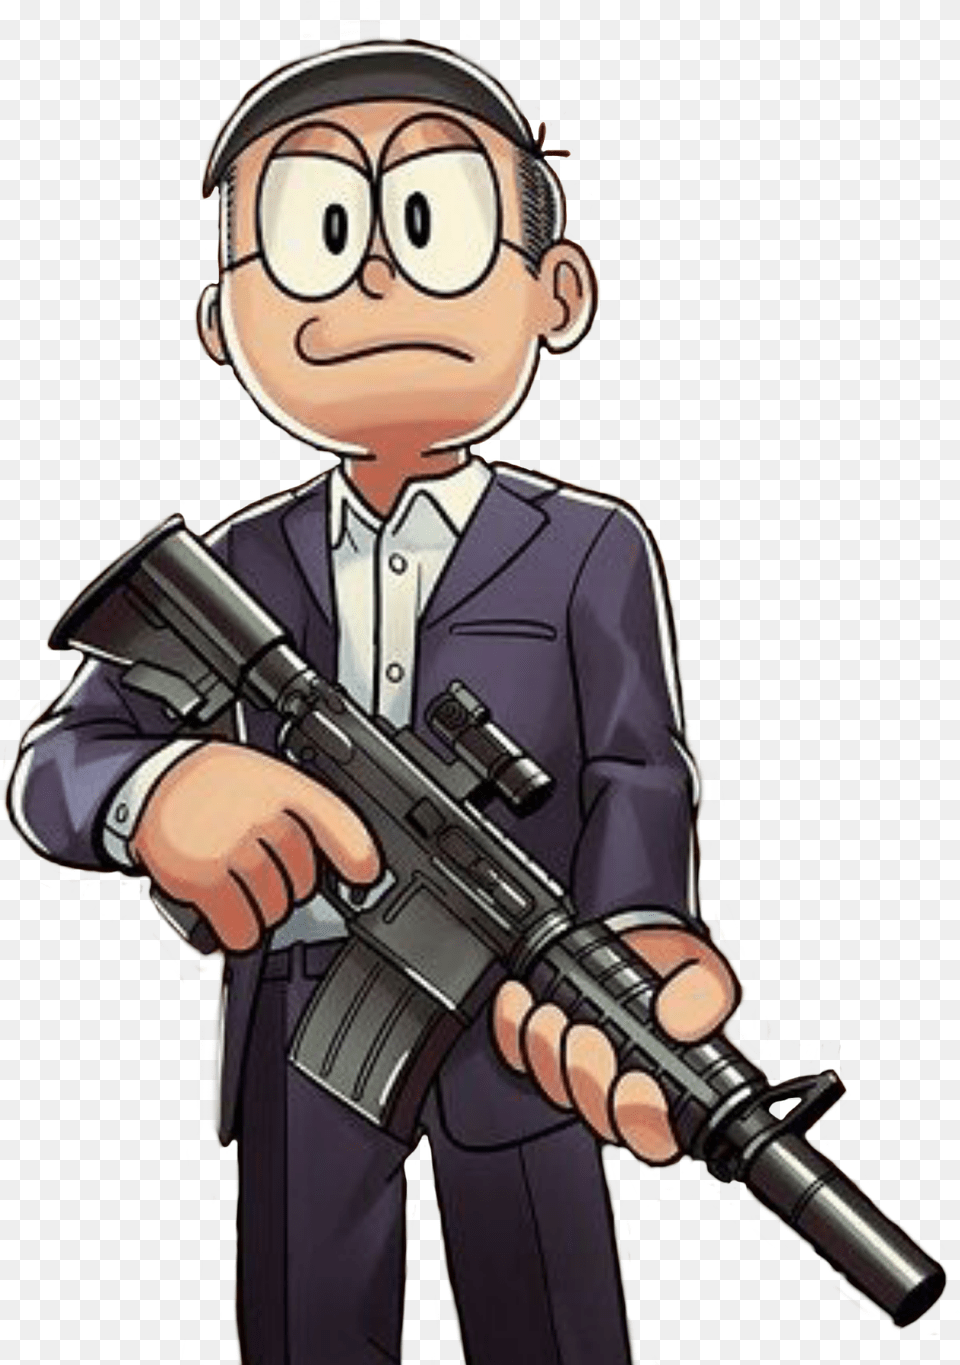 Doraemon Gta Download Nobita Nobi With Gun, Weapon, Rifle, Firearm, Comics Png Image